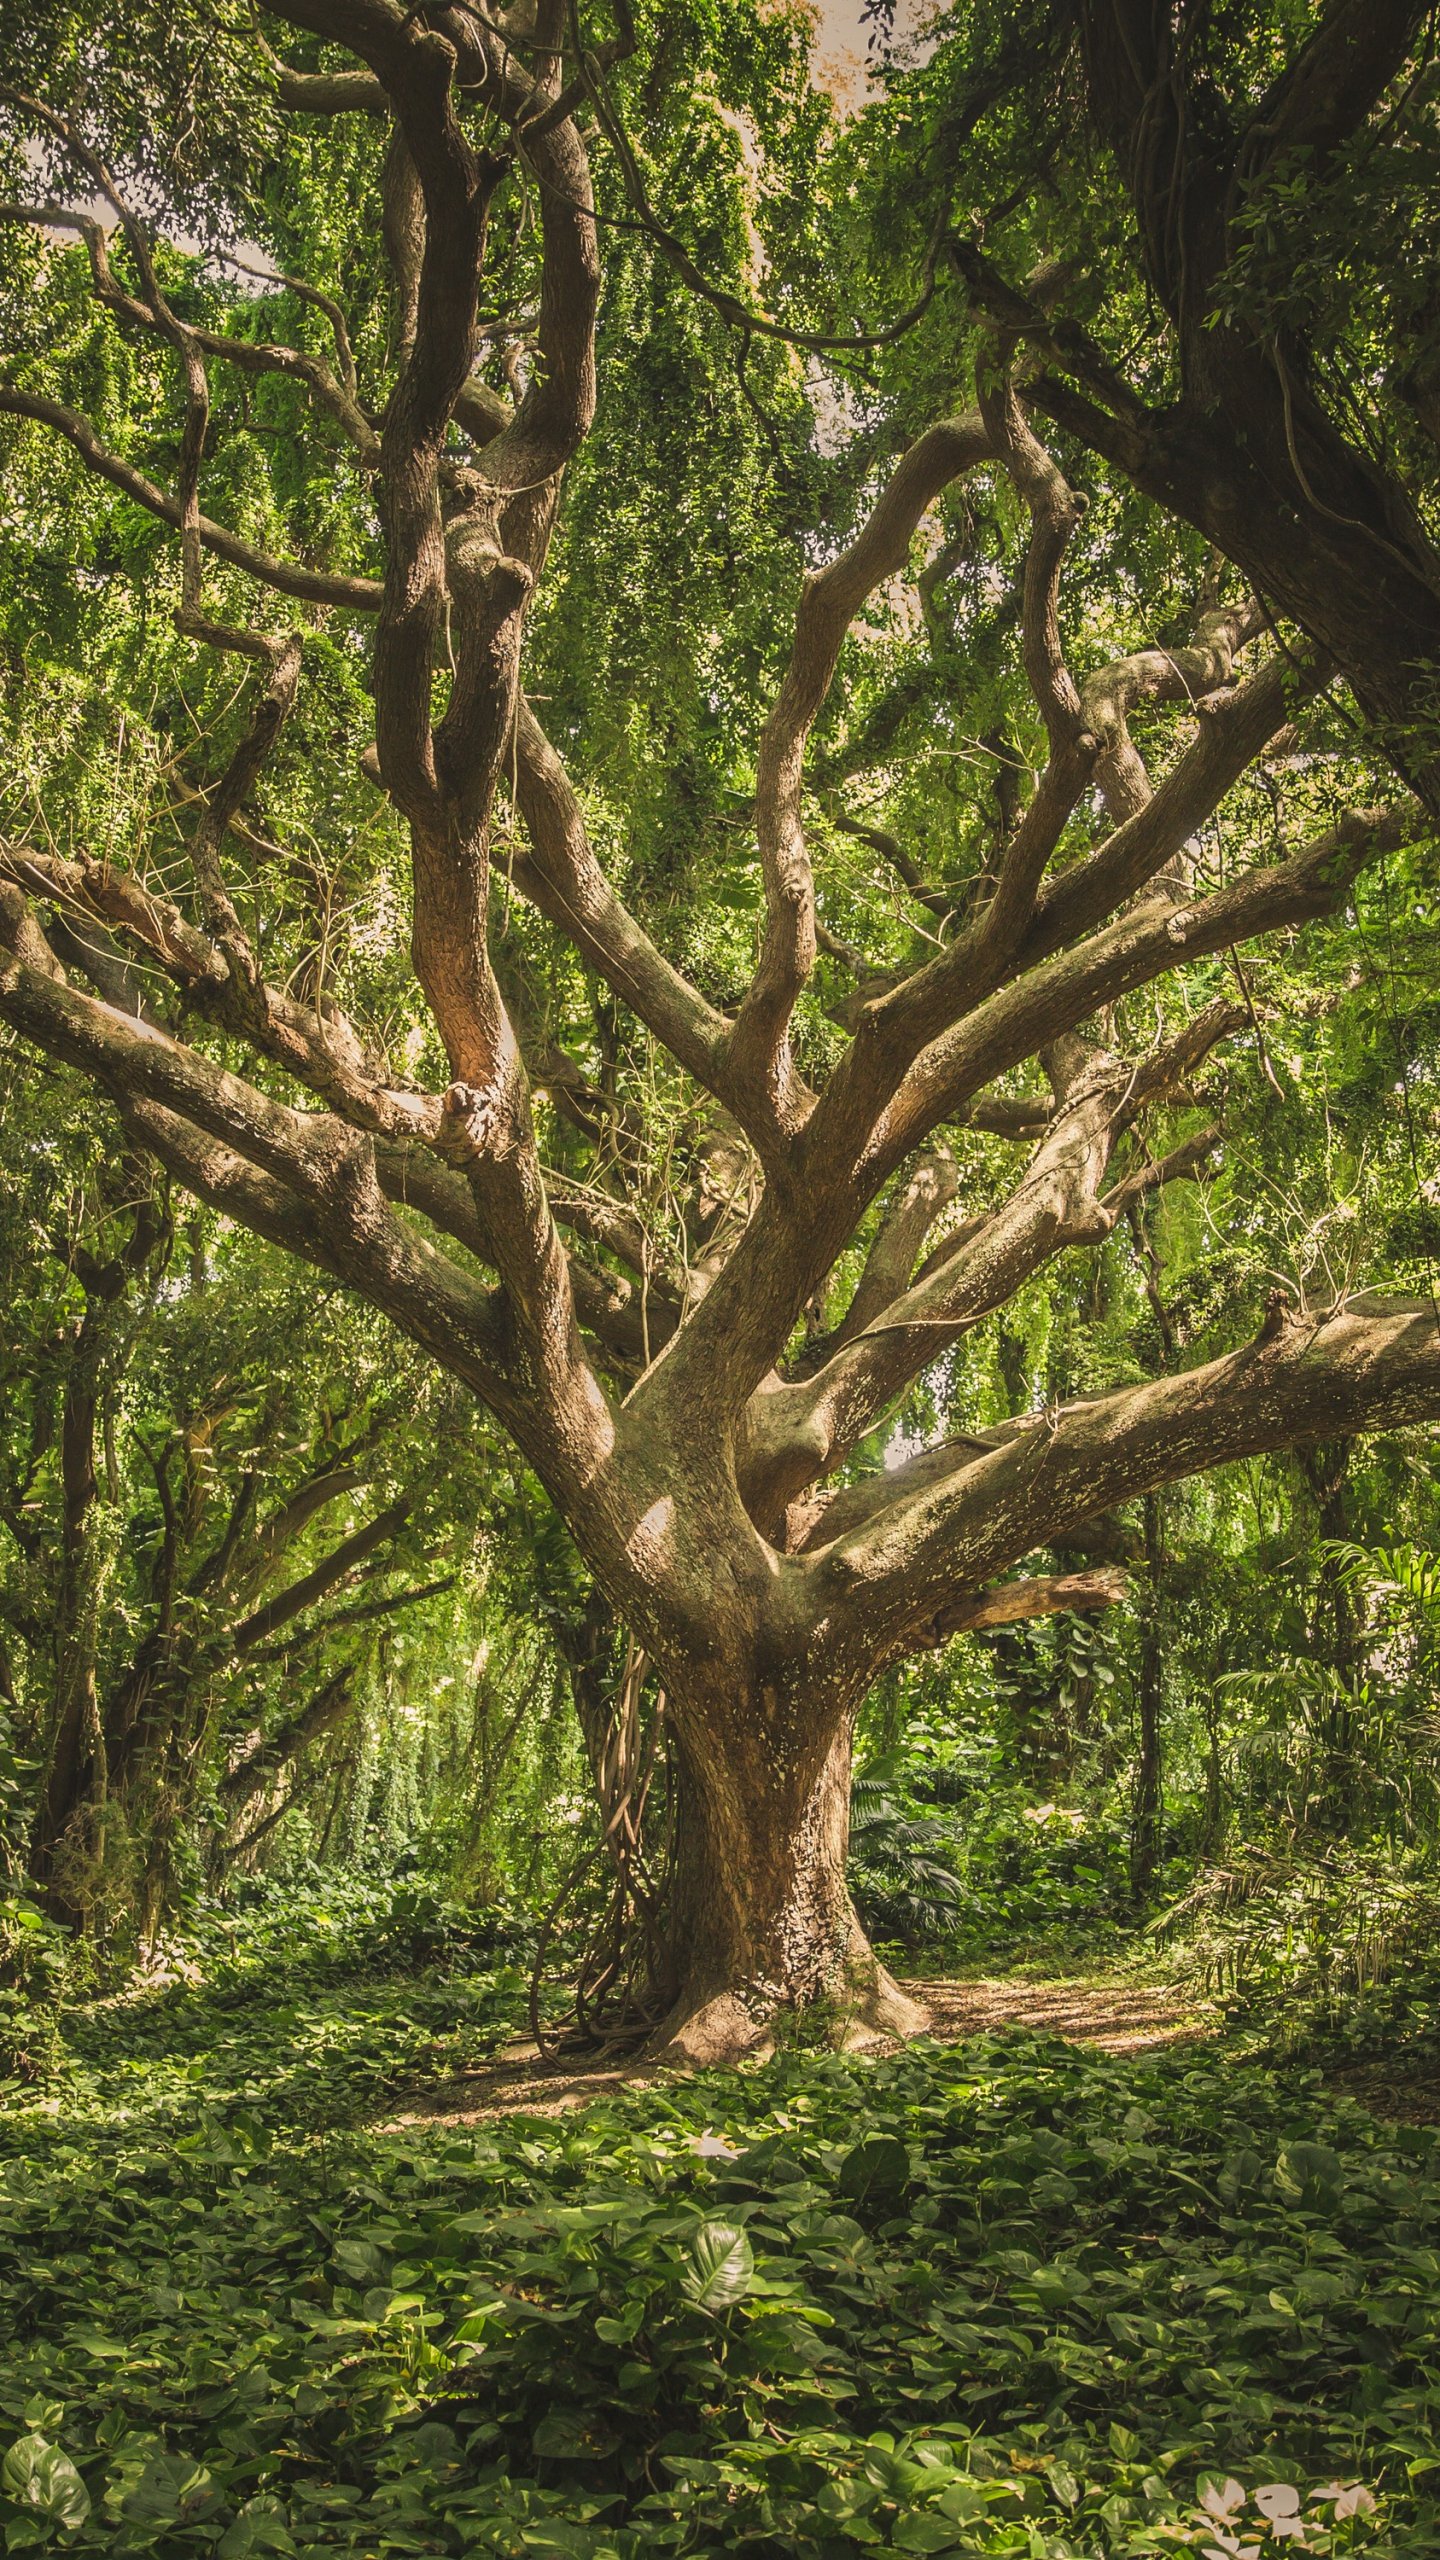 Jungle Tree - Hawaii Wallpaper - iPhone, Android & Desktop Backgrounds